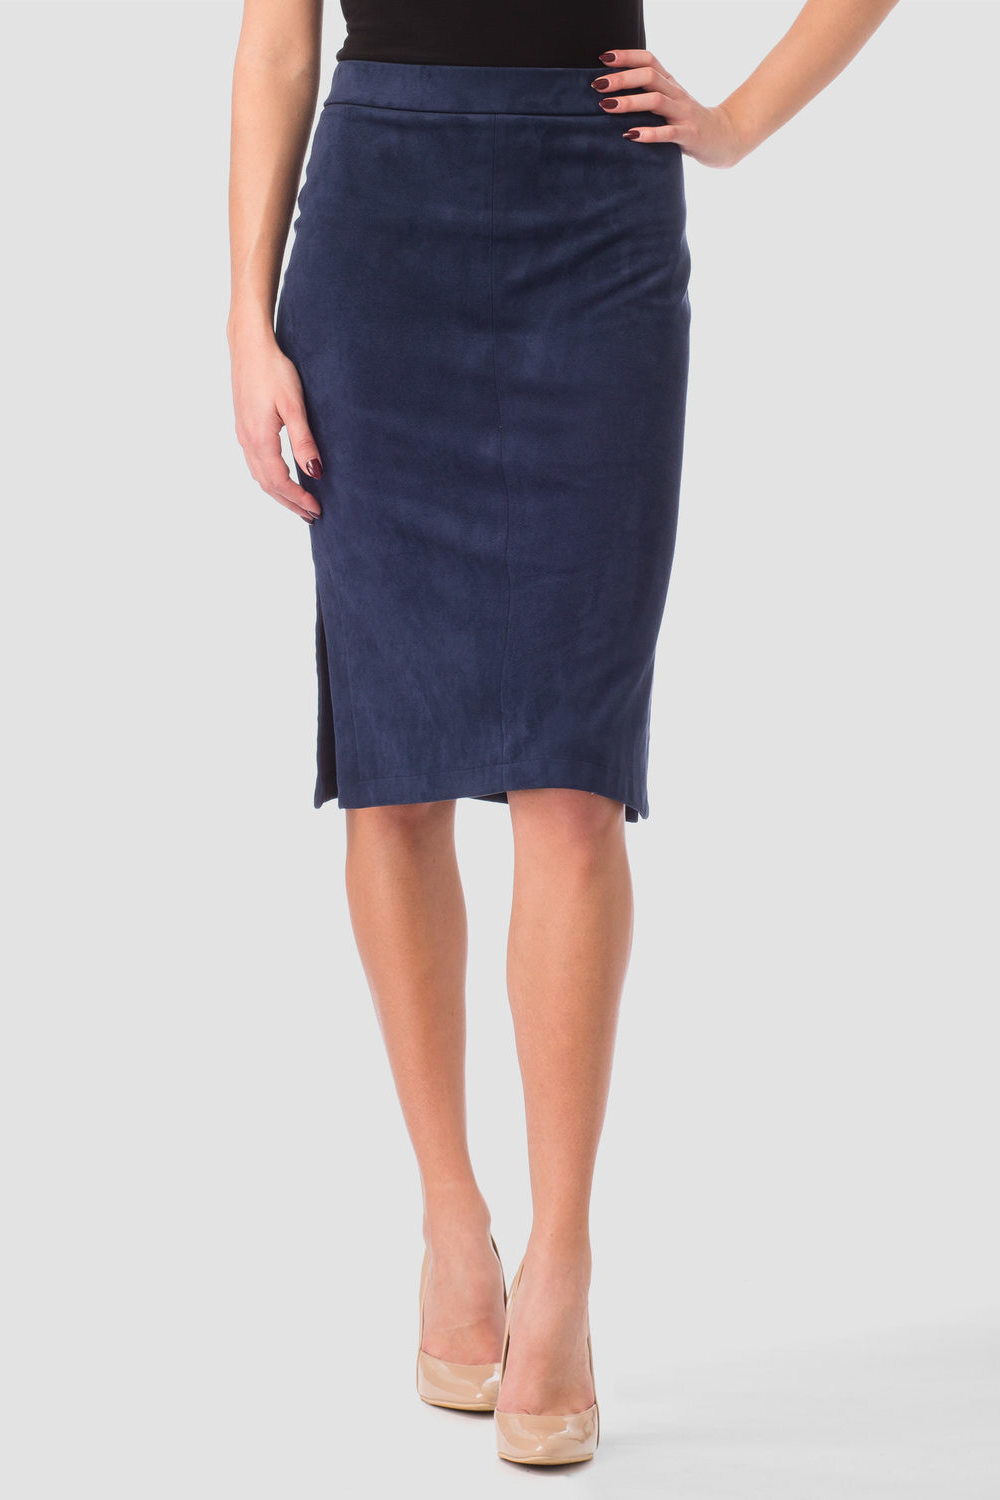 Joseph Ribkoff skirt style 171385. Navy Blue